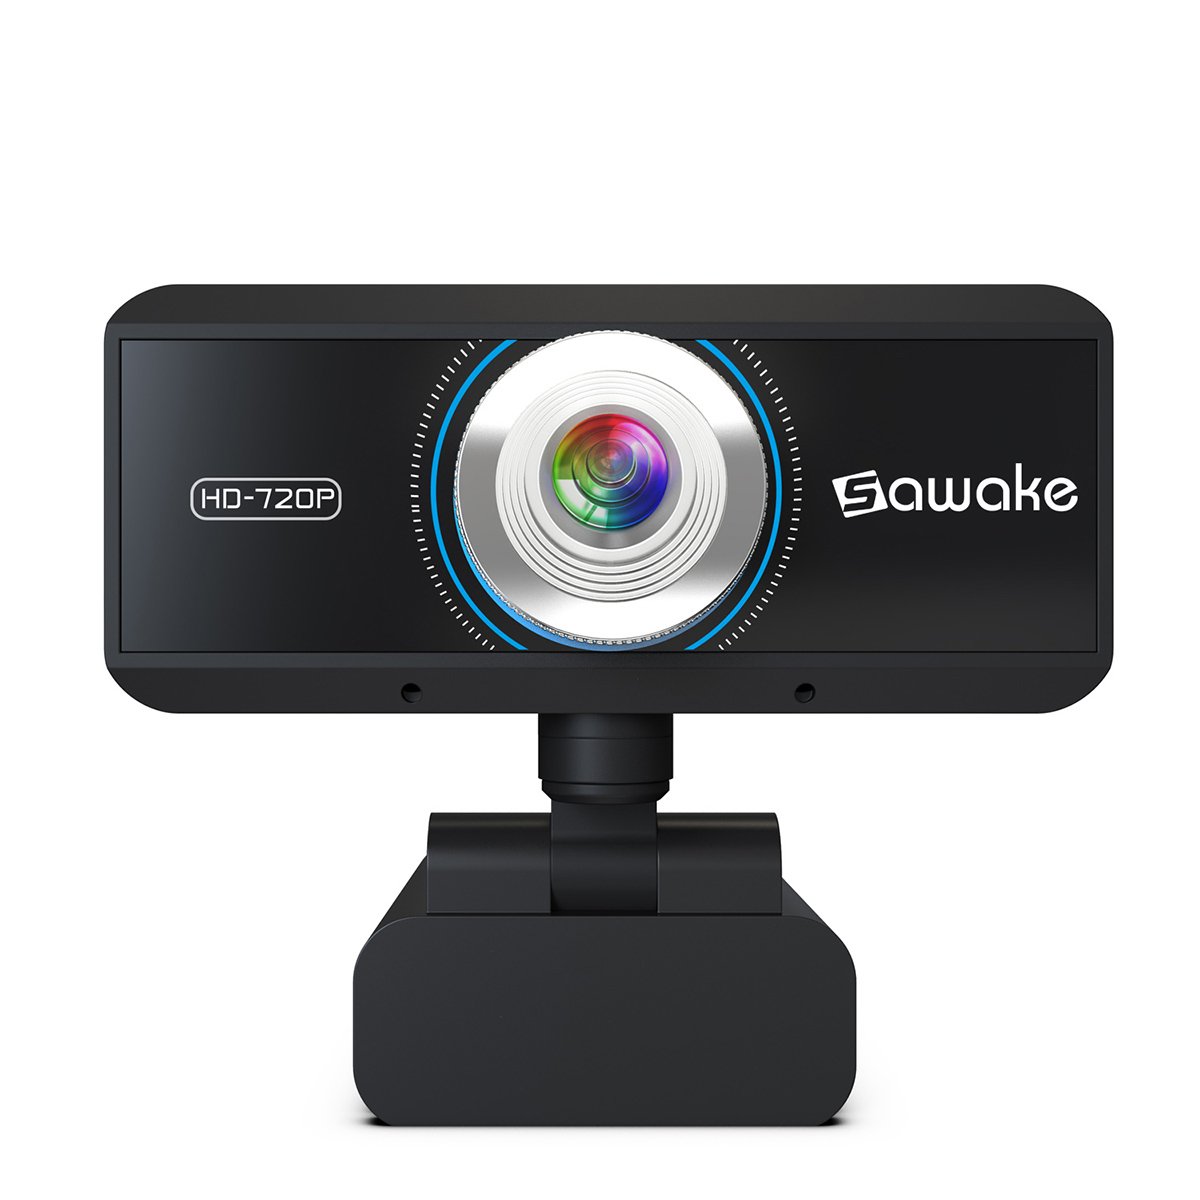 Sawake 720P HD Webcam Computer Camera with Built-in Mic 2